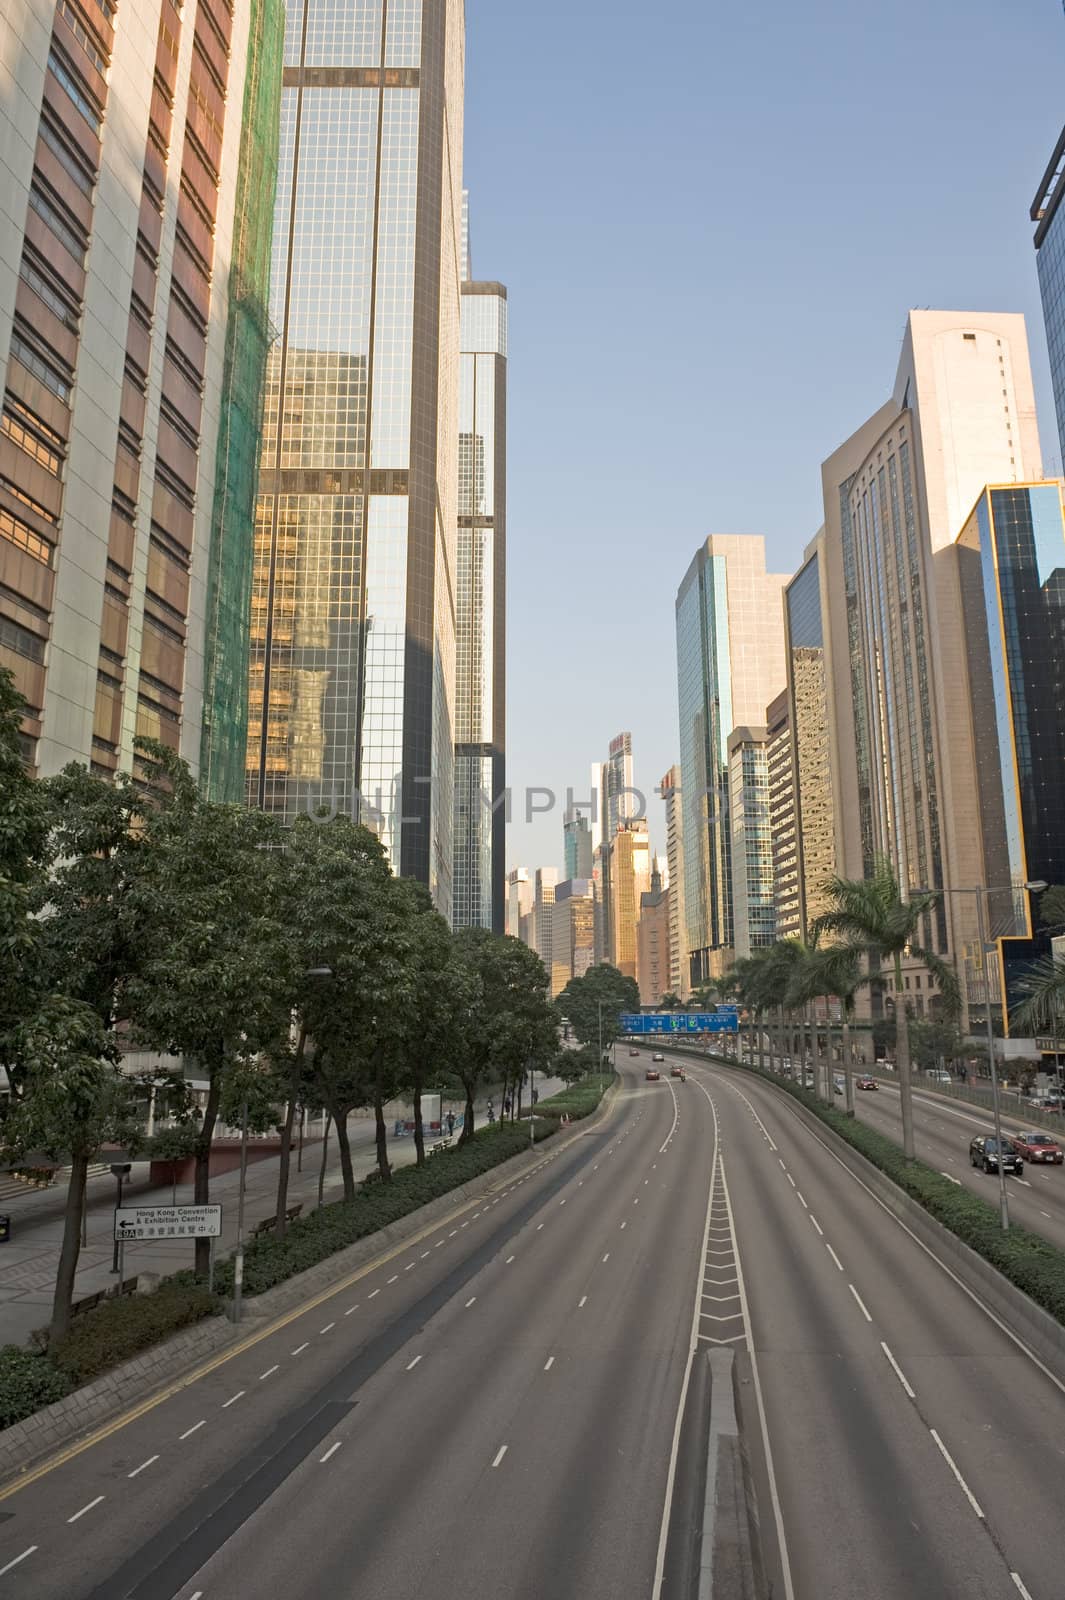 Hong Kong China high rise buildings and the street